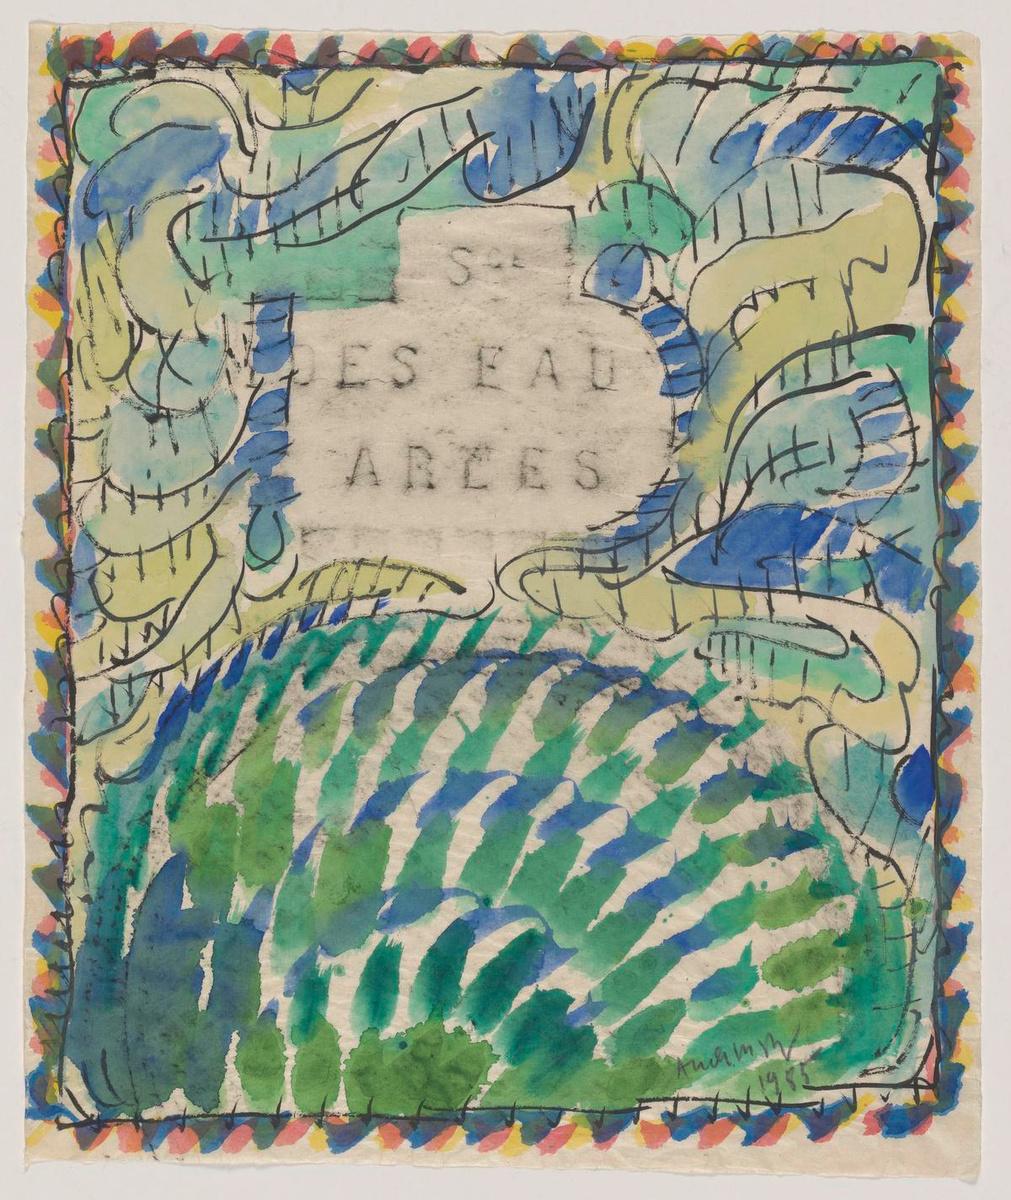 Service des eaux, Arles, Pierre ALECHINSKY (1985). Stempel, Oost-Indische inkt en aquarel op Chinees papier.